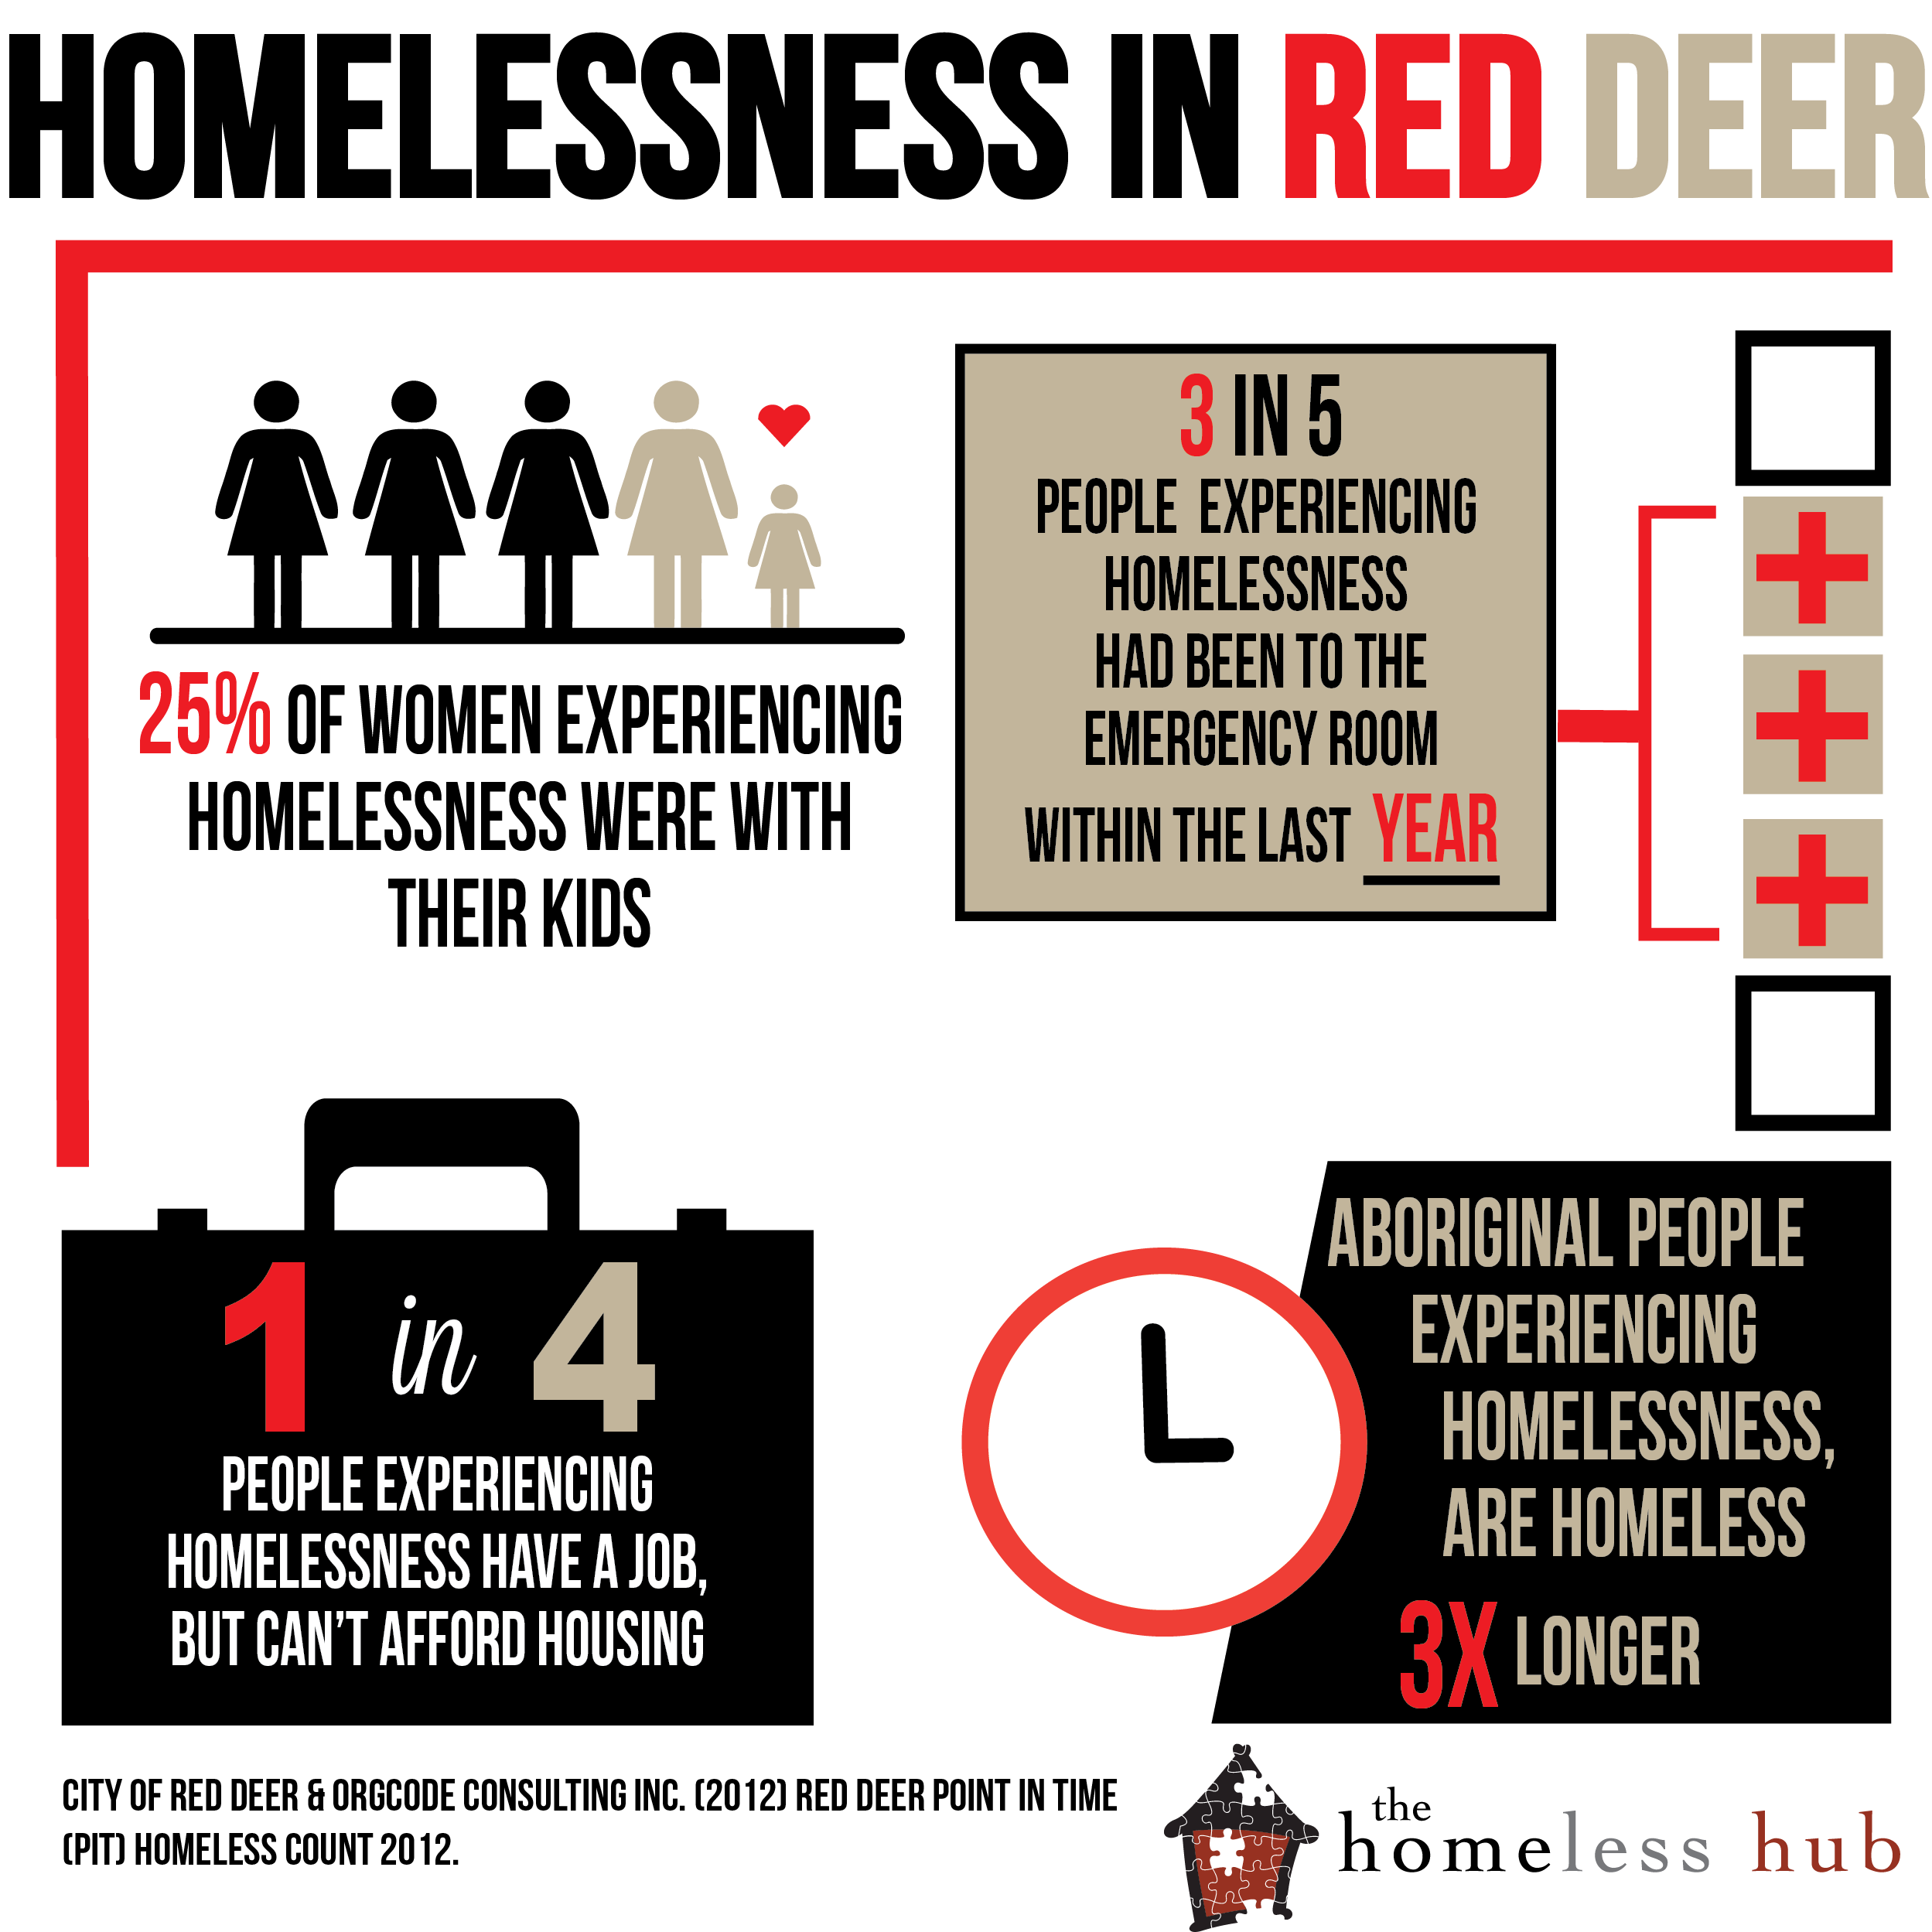 Homelessness in Red Deer